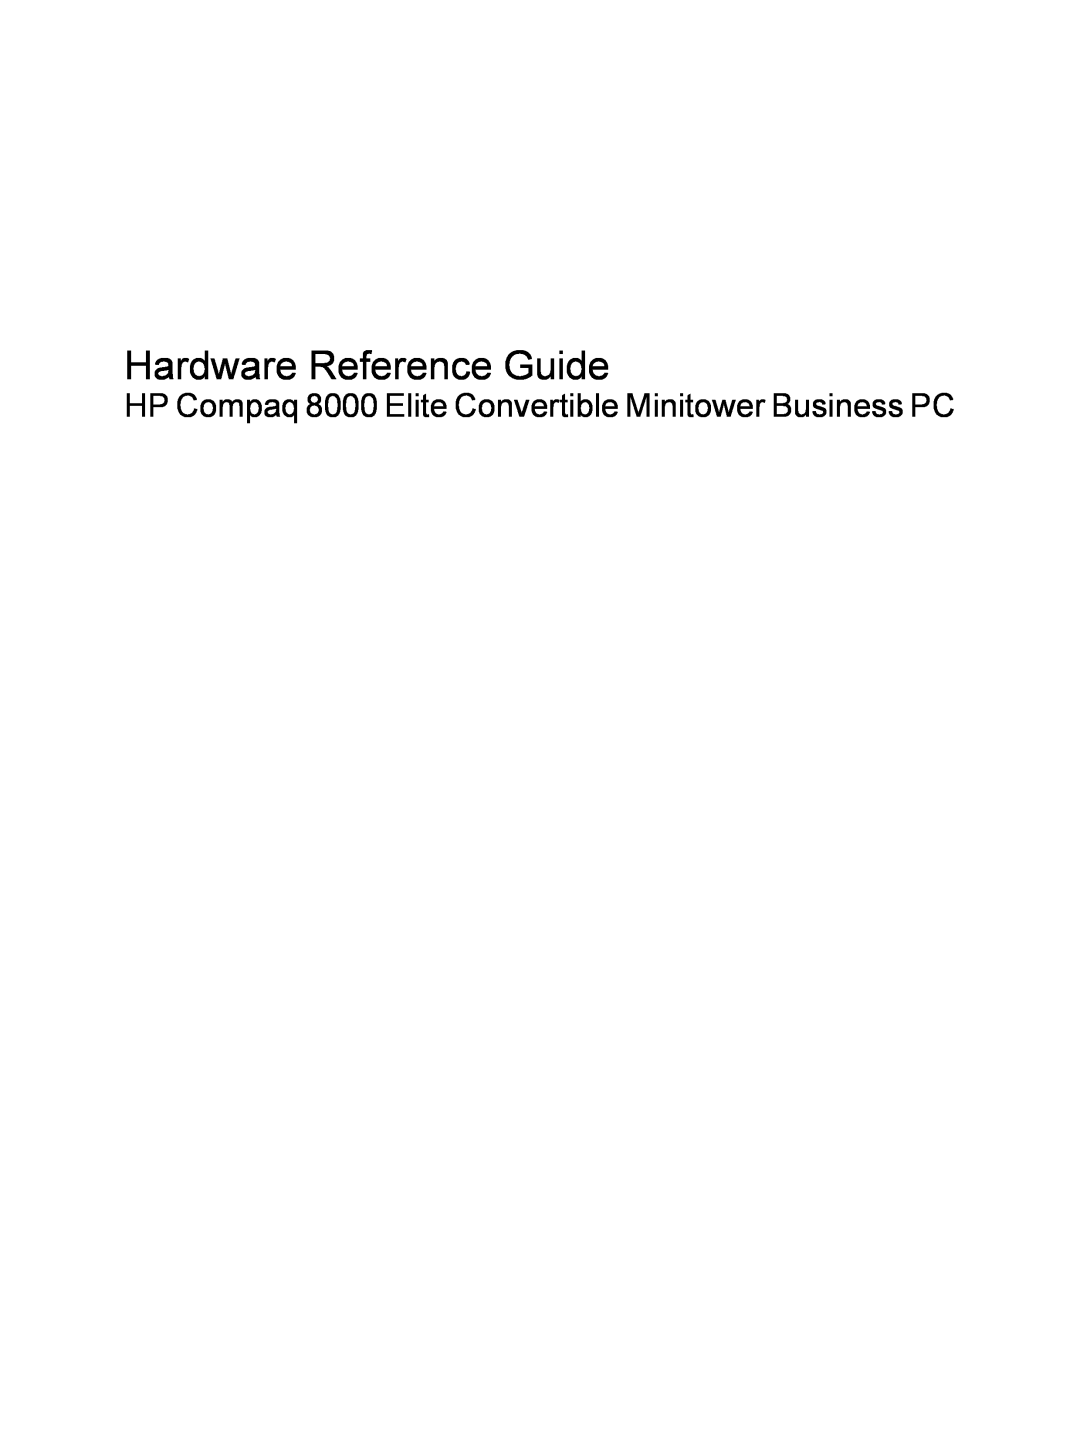 Hitachi 8000 Elite manual Hardware Reference Guide 